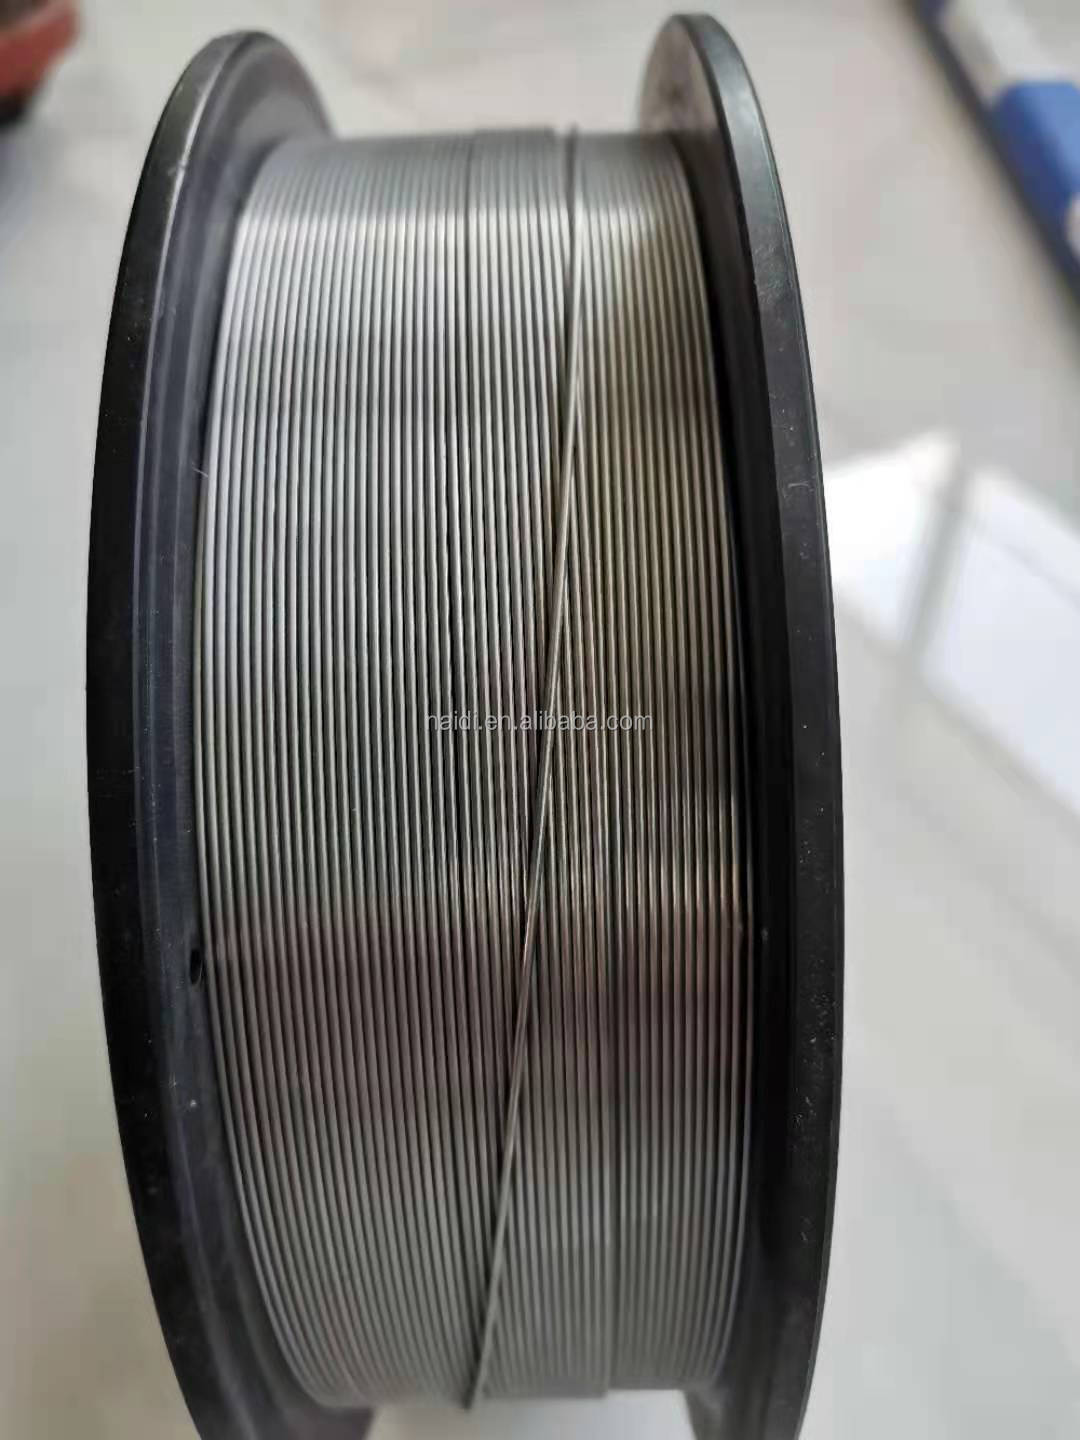 Manufacture super nickel alloy ernicr-3 625 601 inconel 600 mig/tig welding wire 0.8mm